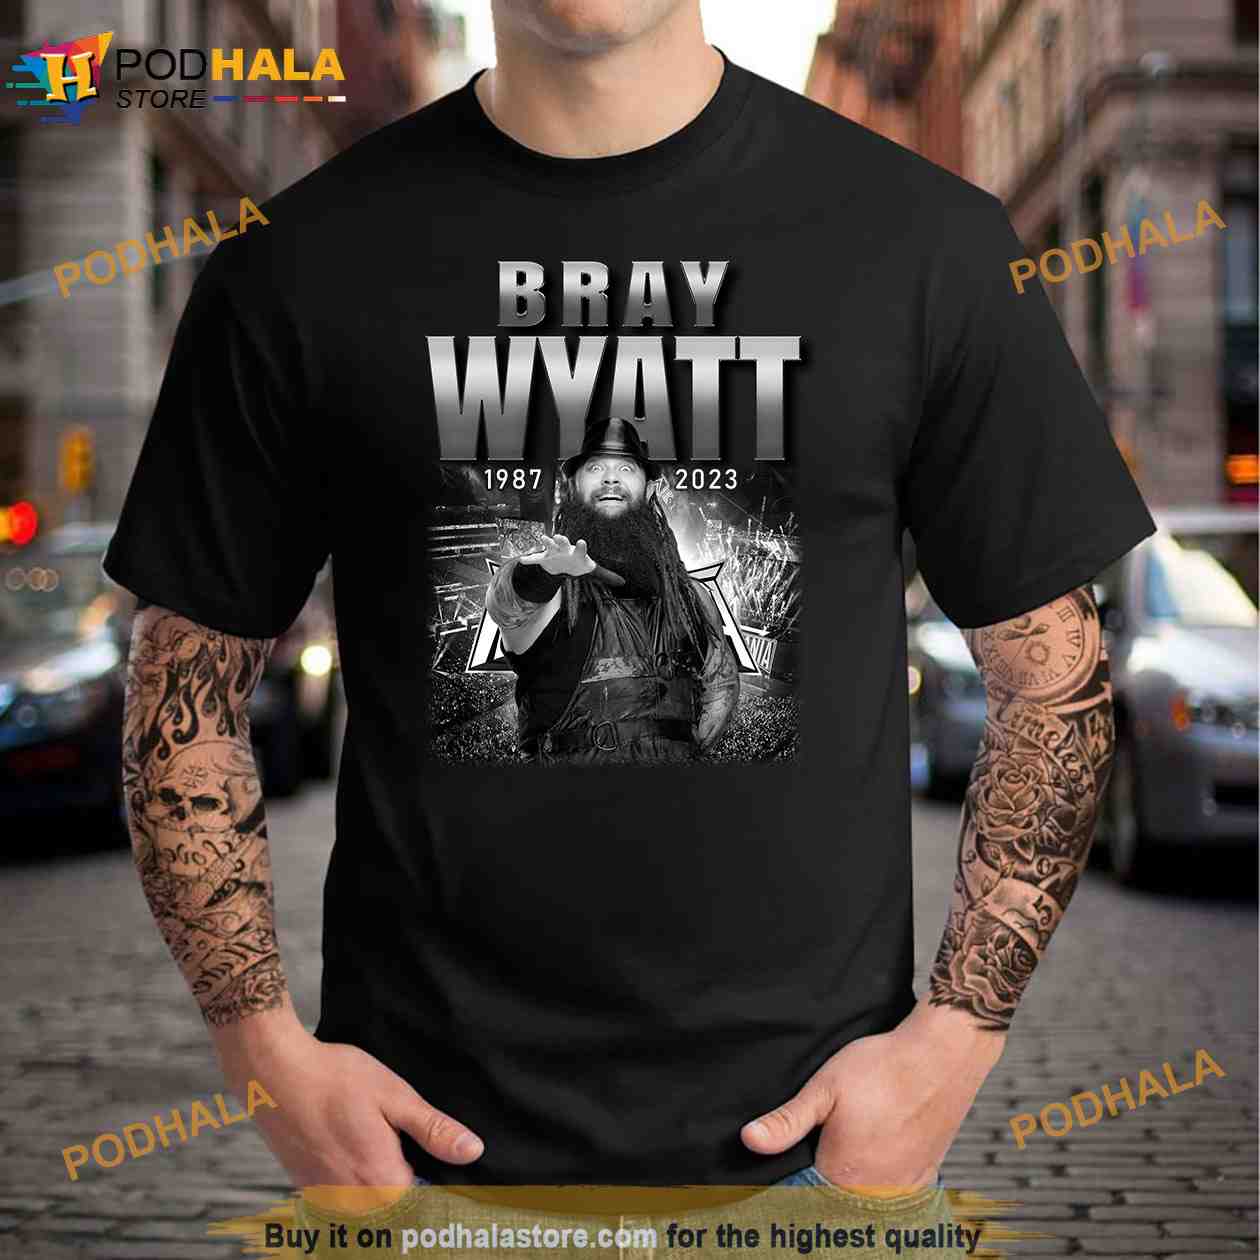 RIP BRAY WYATT 2023 - Bray Wyatt Rip - T-Shirt